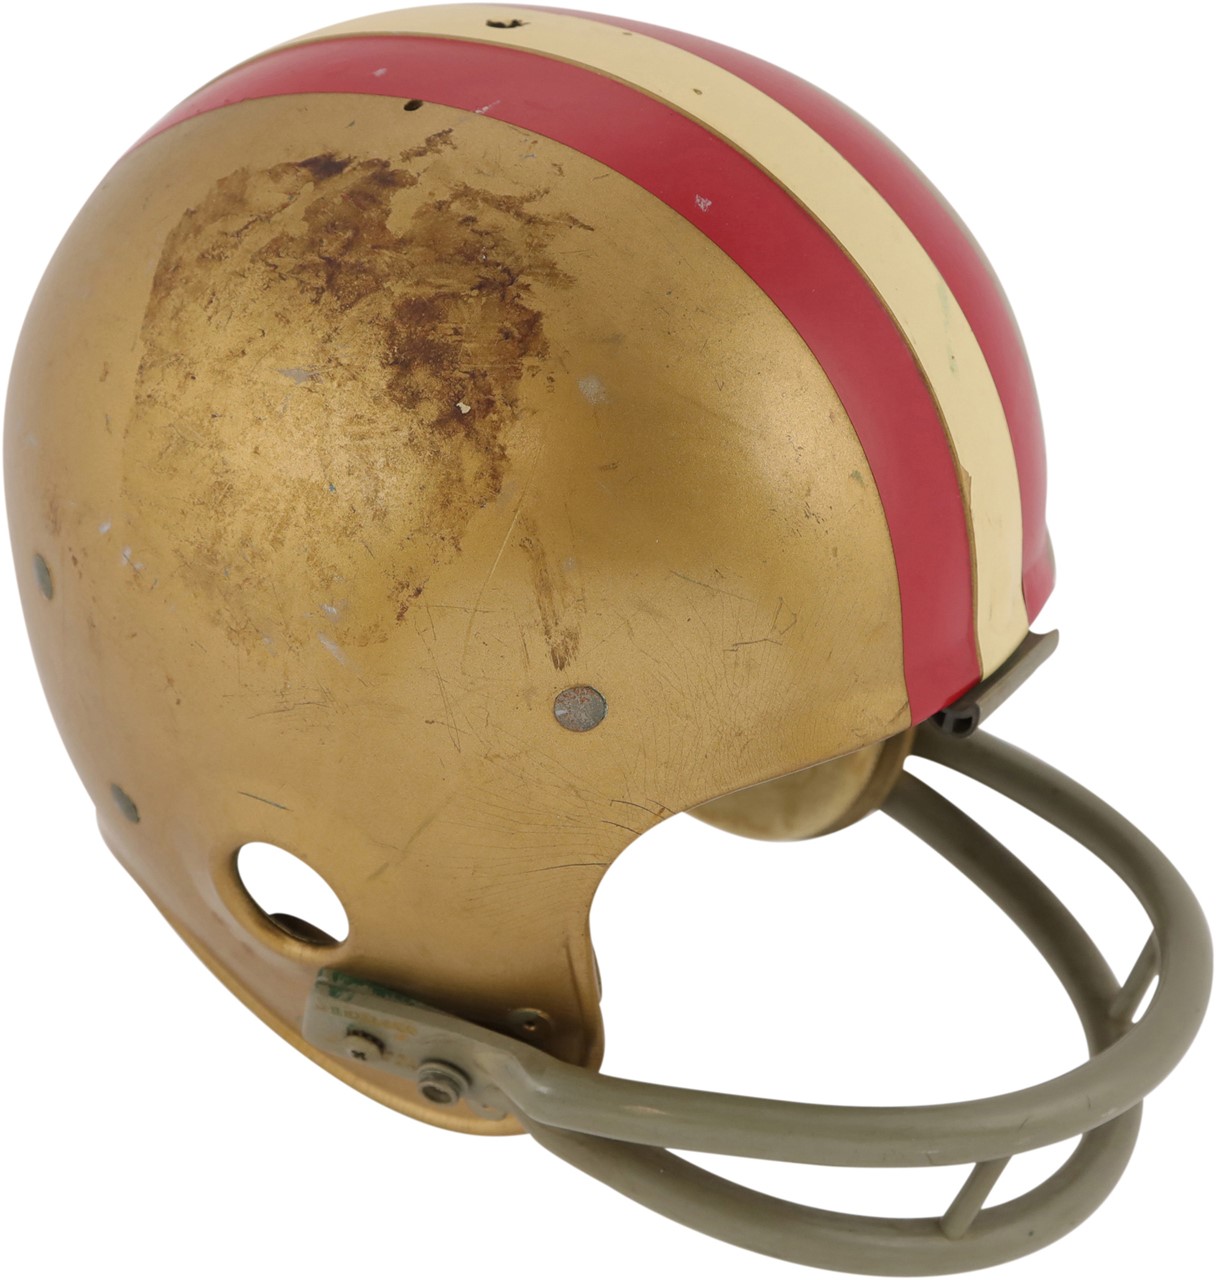 The Philadelphia Eagles Collection - 1965 Norm Snead Pro Bowl Philadelphia Eagles Game Worn Helmet (MEARS)